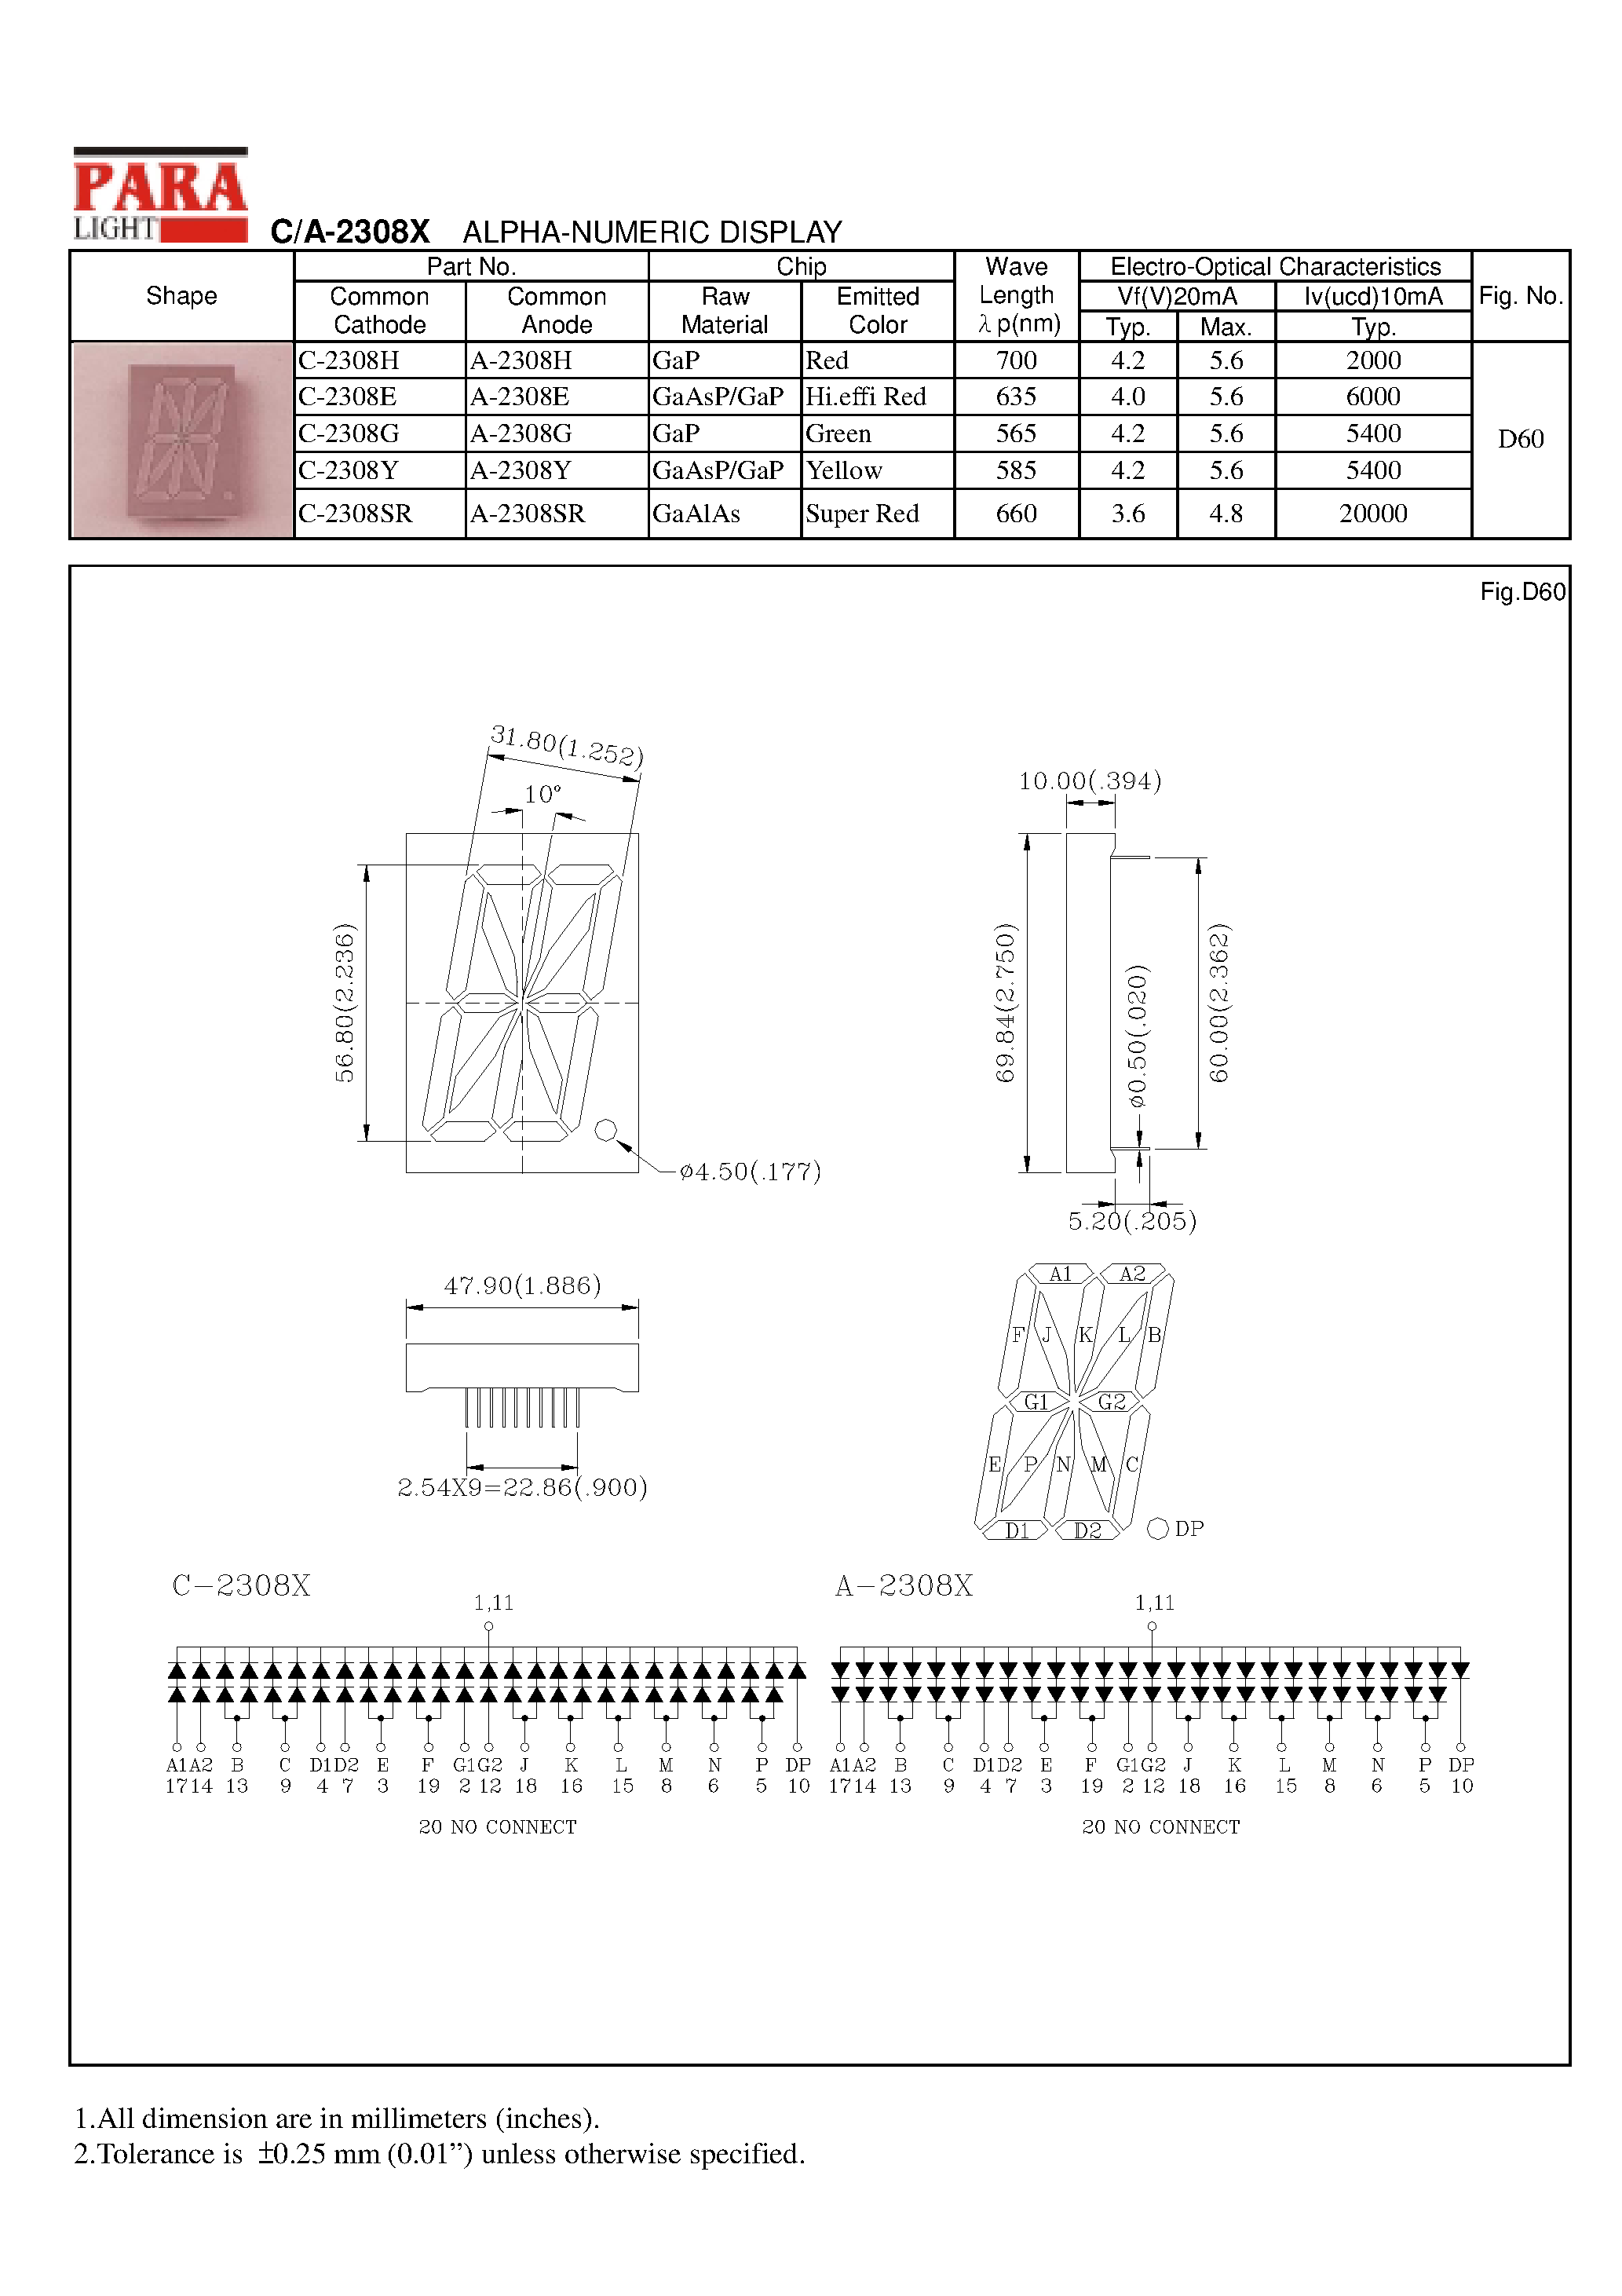 Datasheet A-2308G - ALPHA-NUMERIC DISPLAY page 1